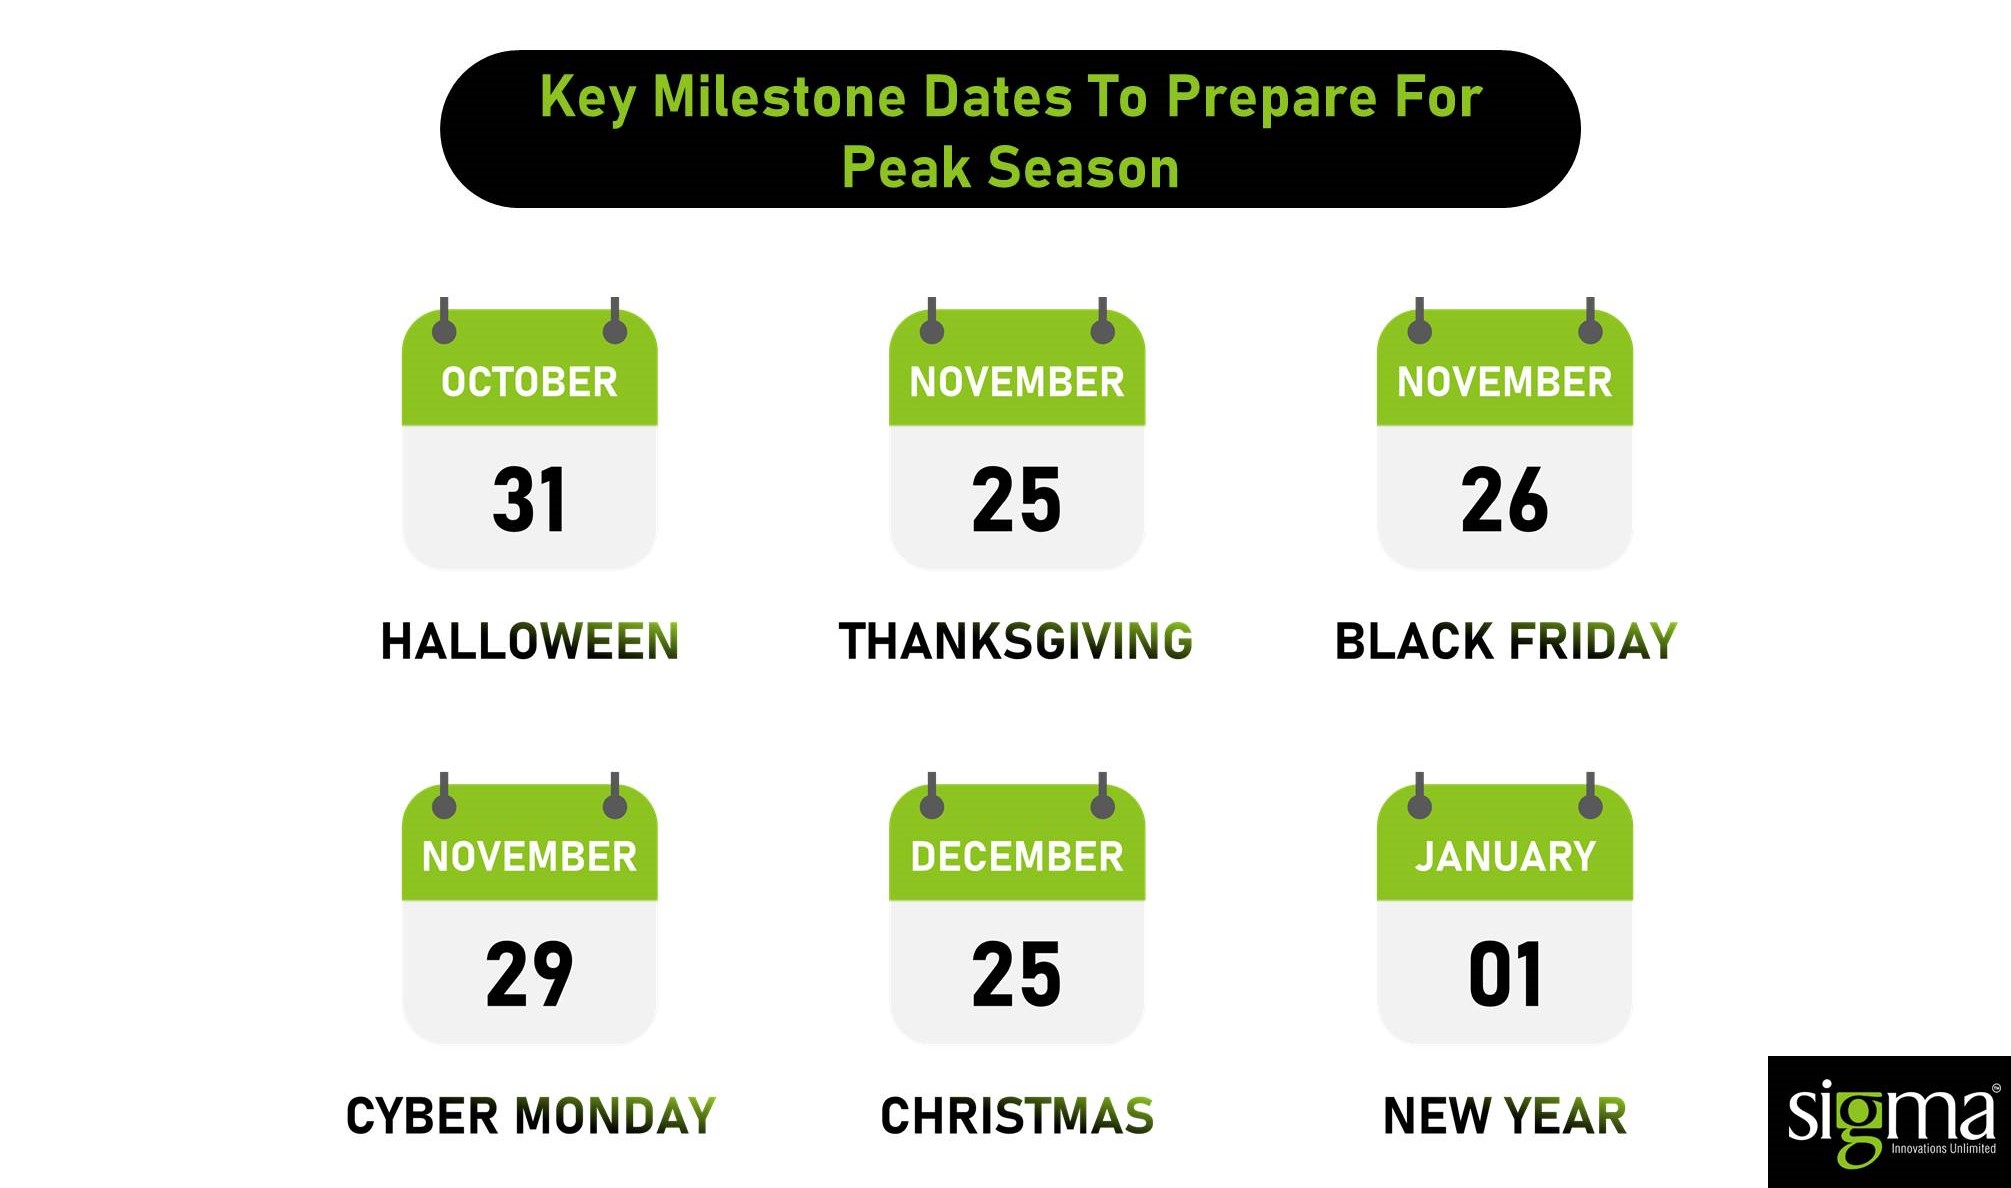 Key milestone dates